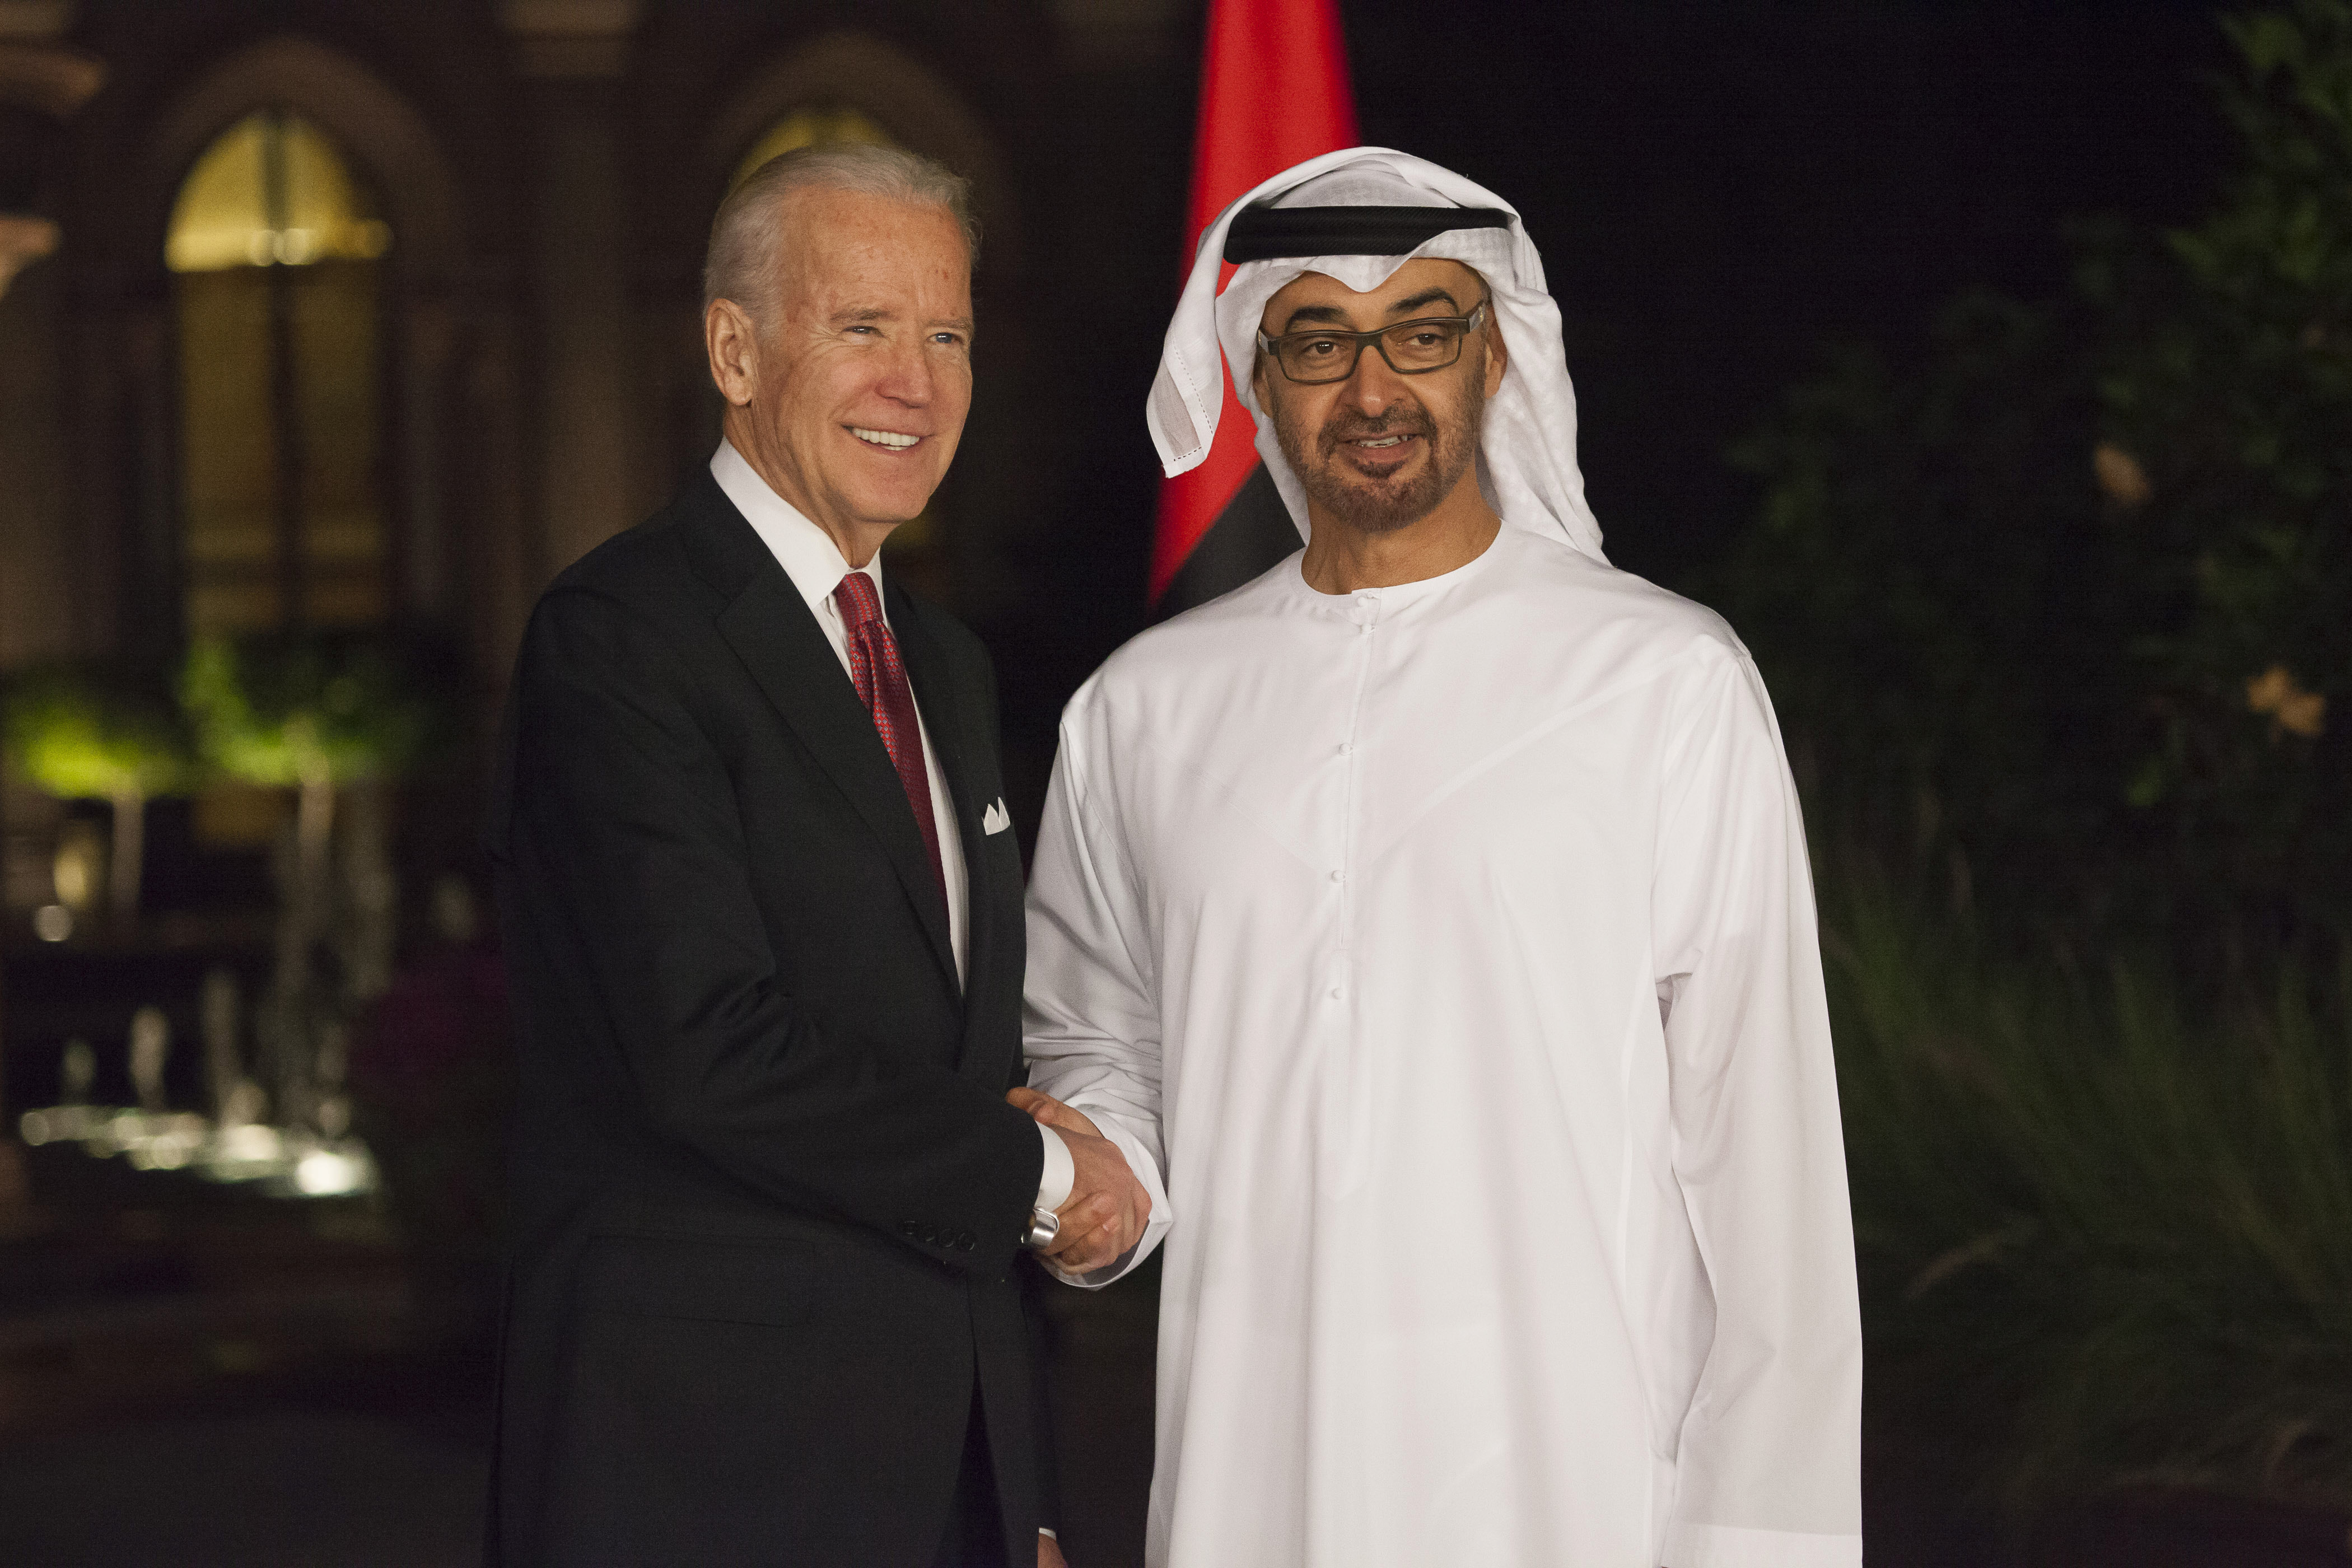 HH Sheikh Mohamed Bin Zayed Al Nahyan shaking hands with American President Joe Biden